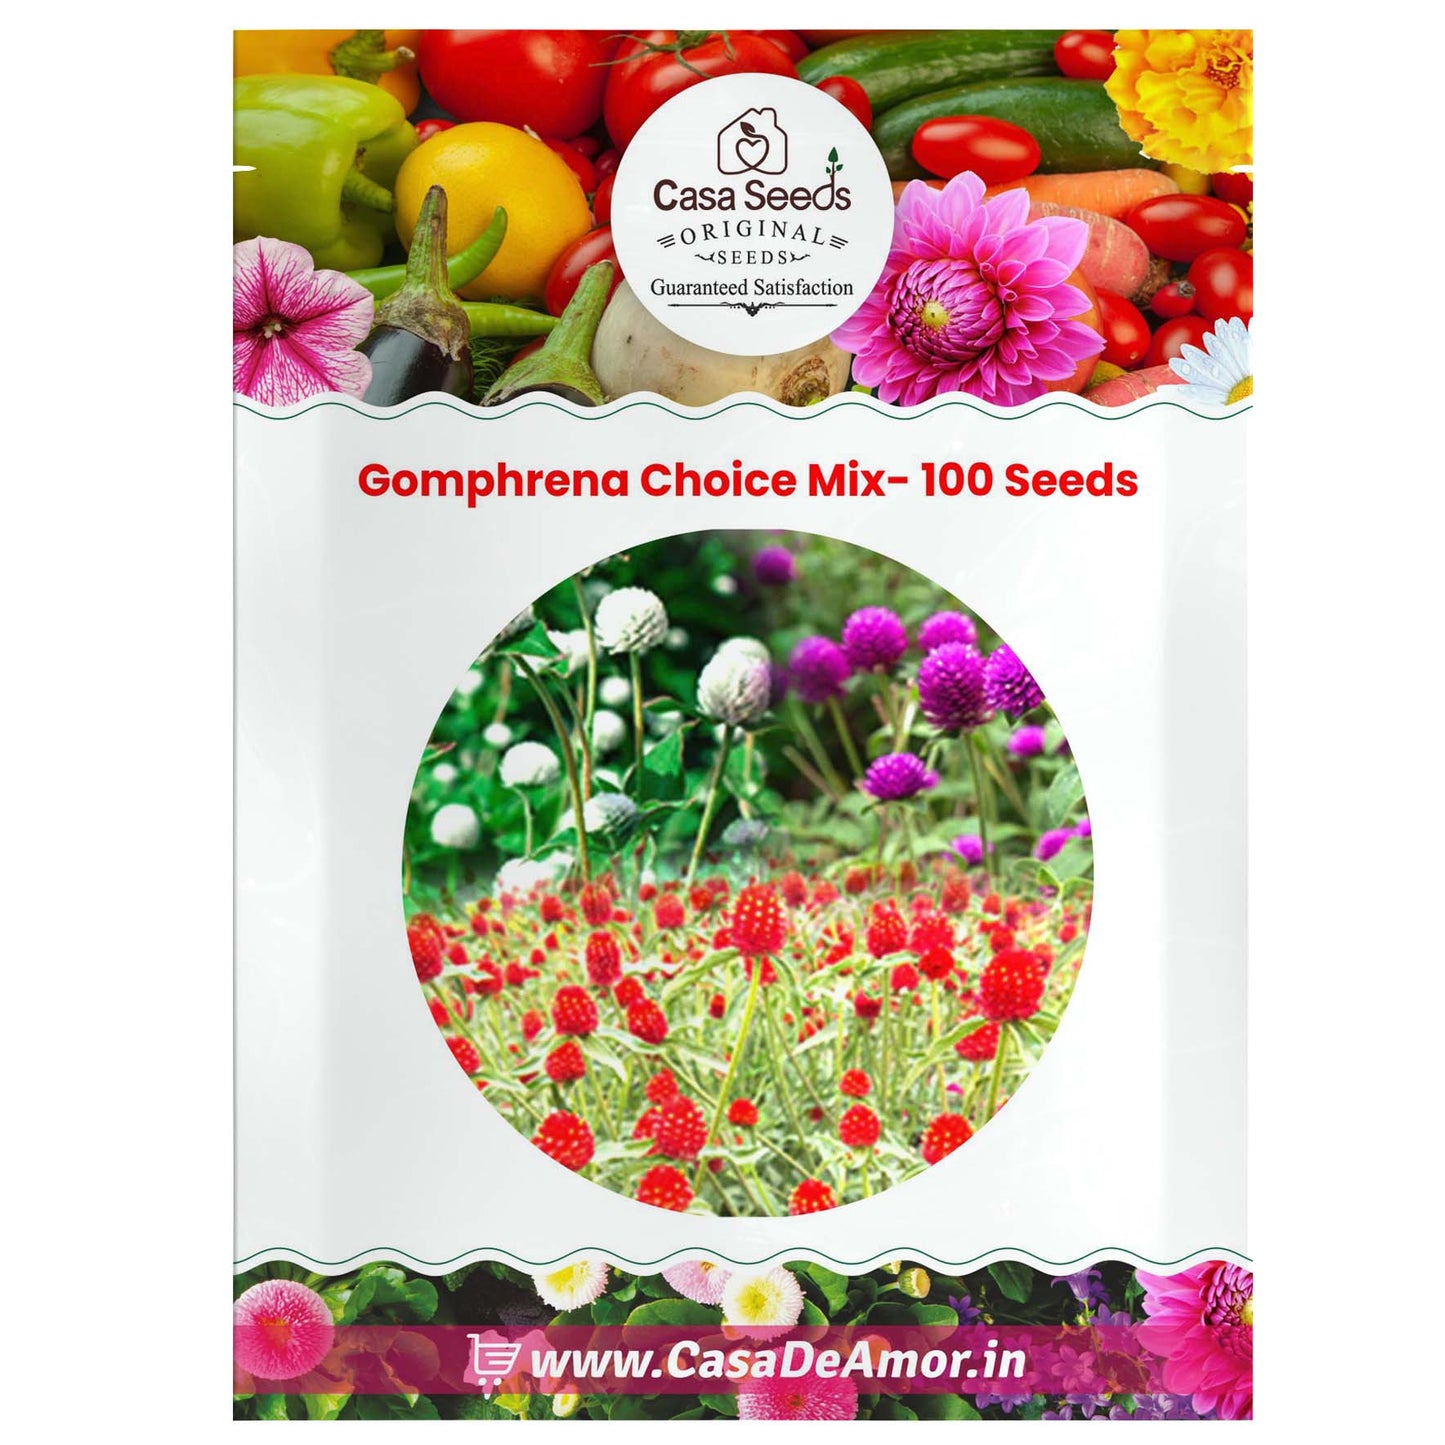 Gomphrena Choice Mix- 100 Seeds